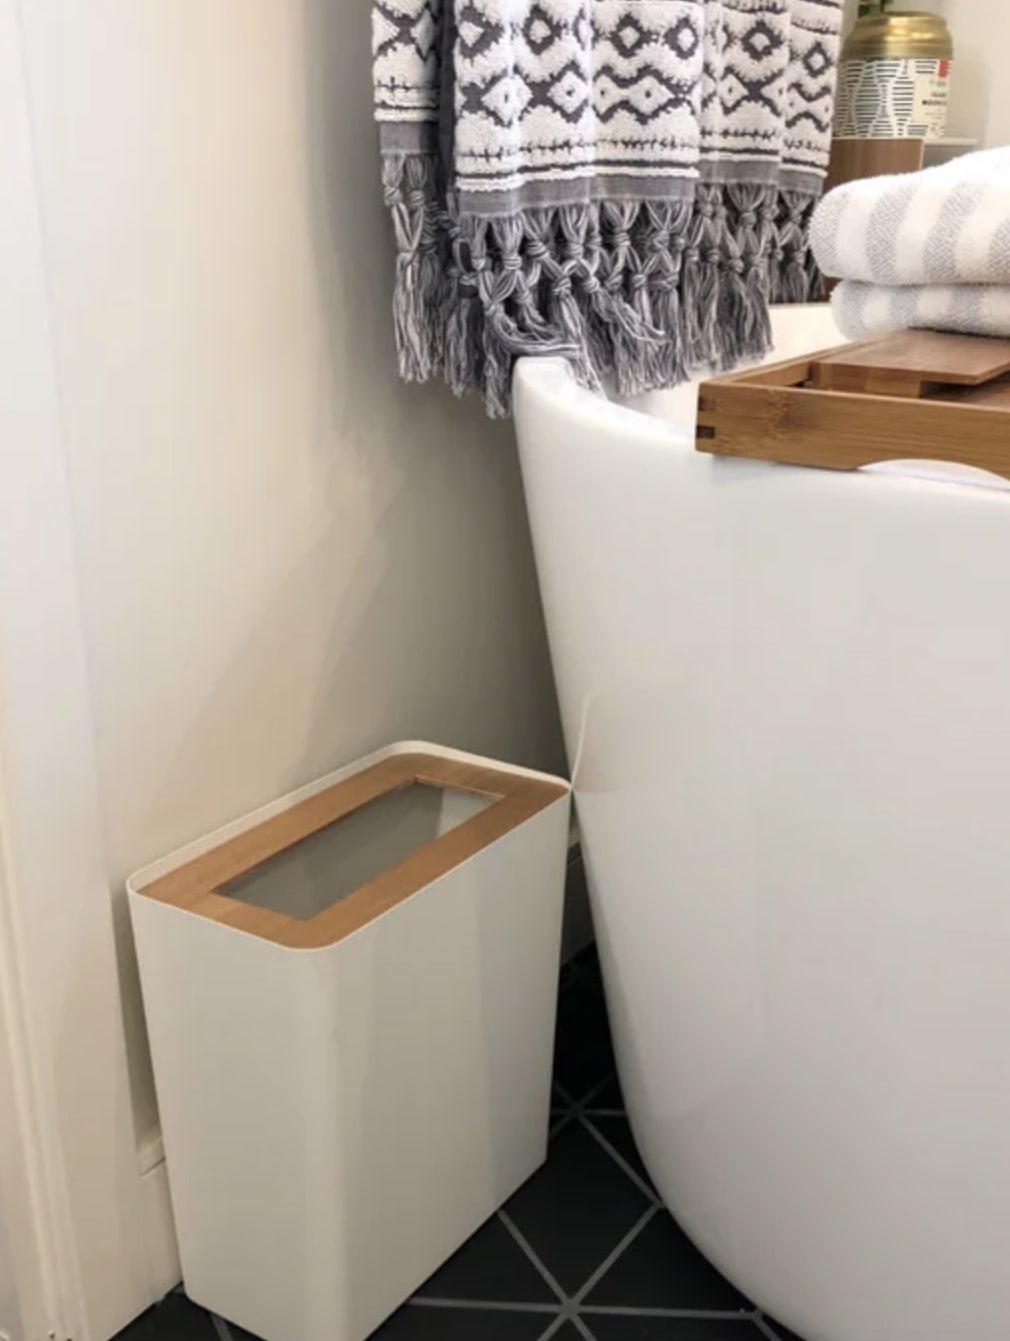 A reviewer&#x27;s bathroom trash can